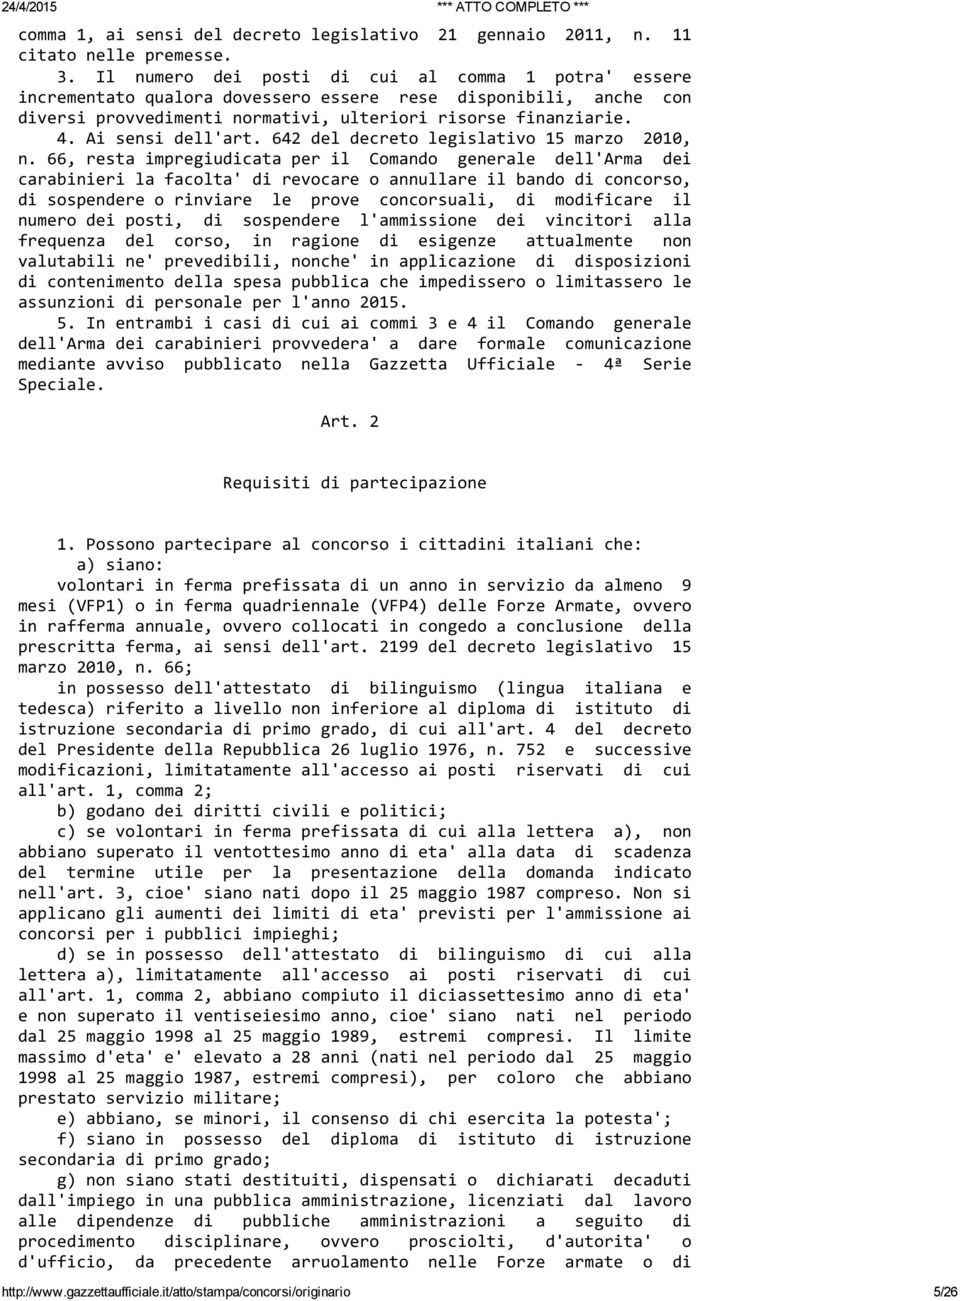 Ai sensi dell'art. 642 del decreto legislativo 15 marzo 2010, n.